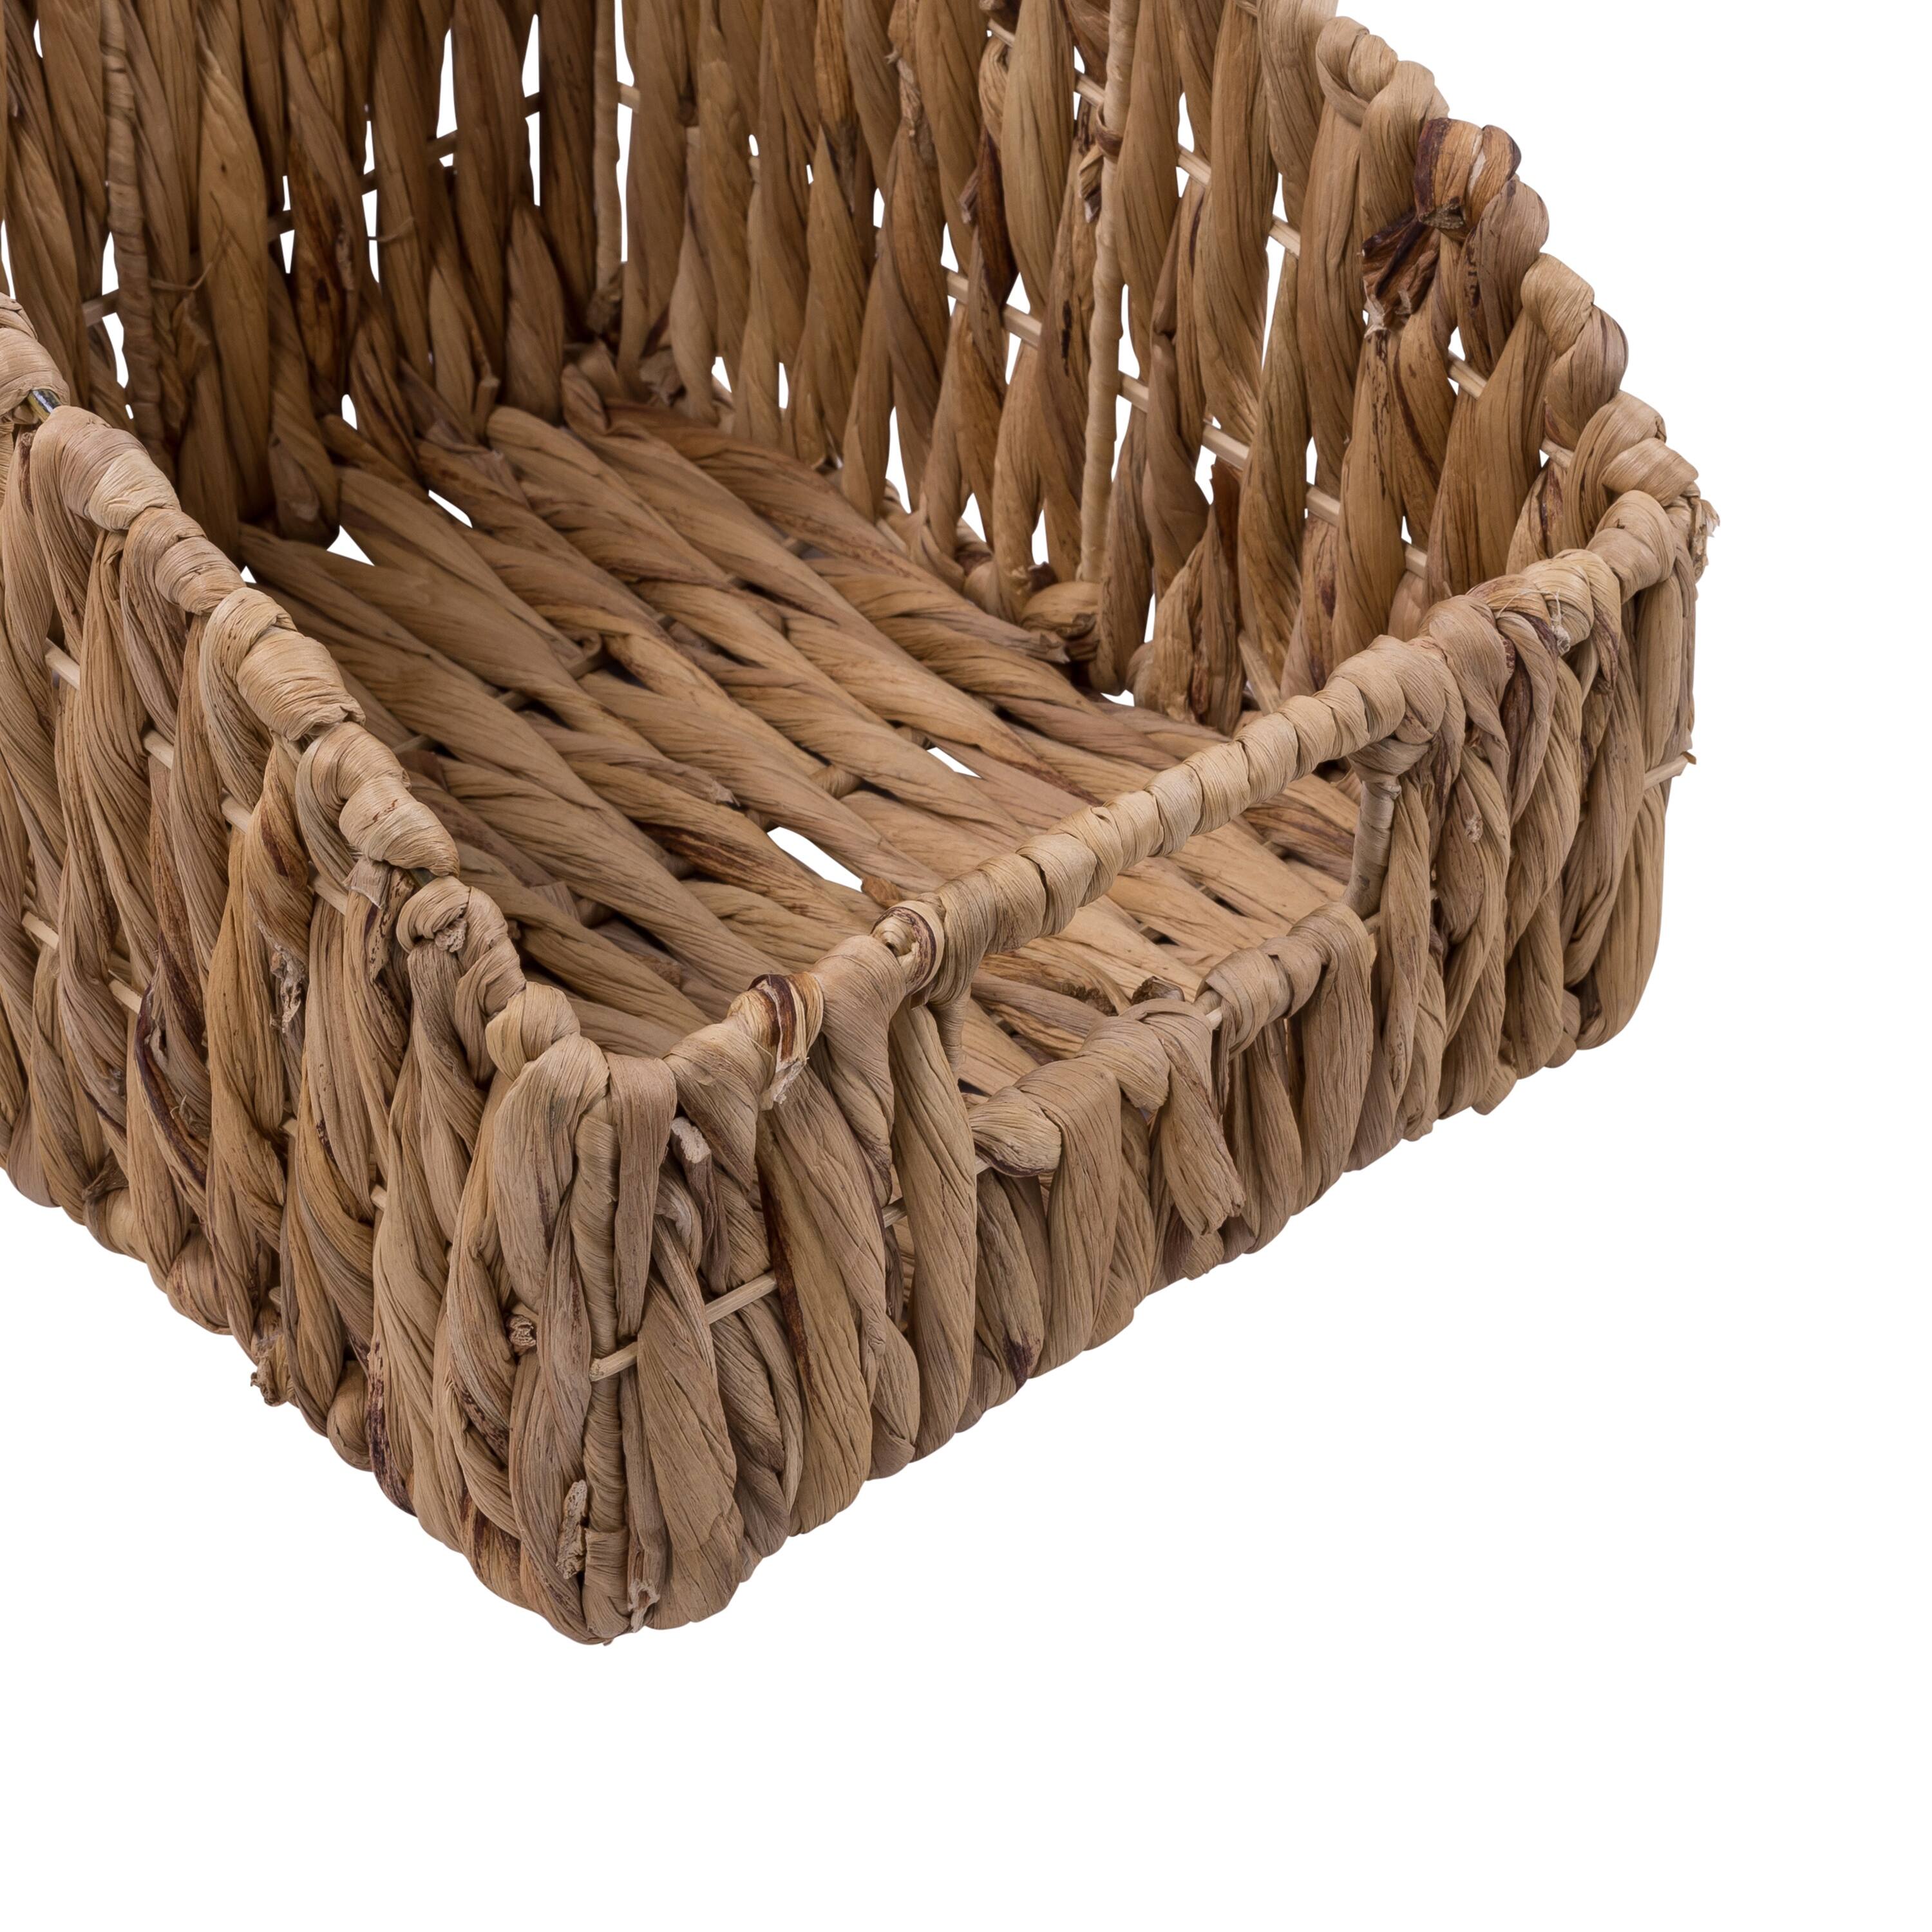 Natural Wicker Open Storage Baskets (Set of 2)